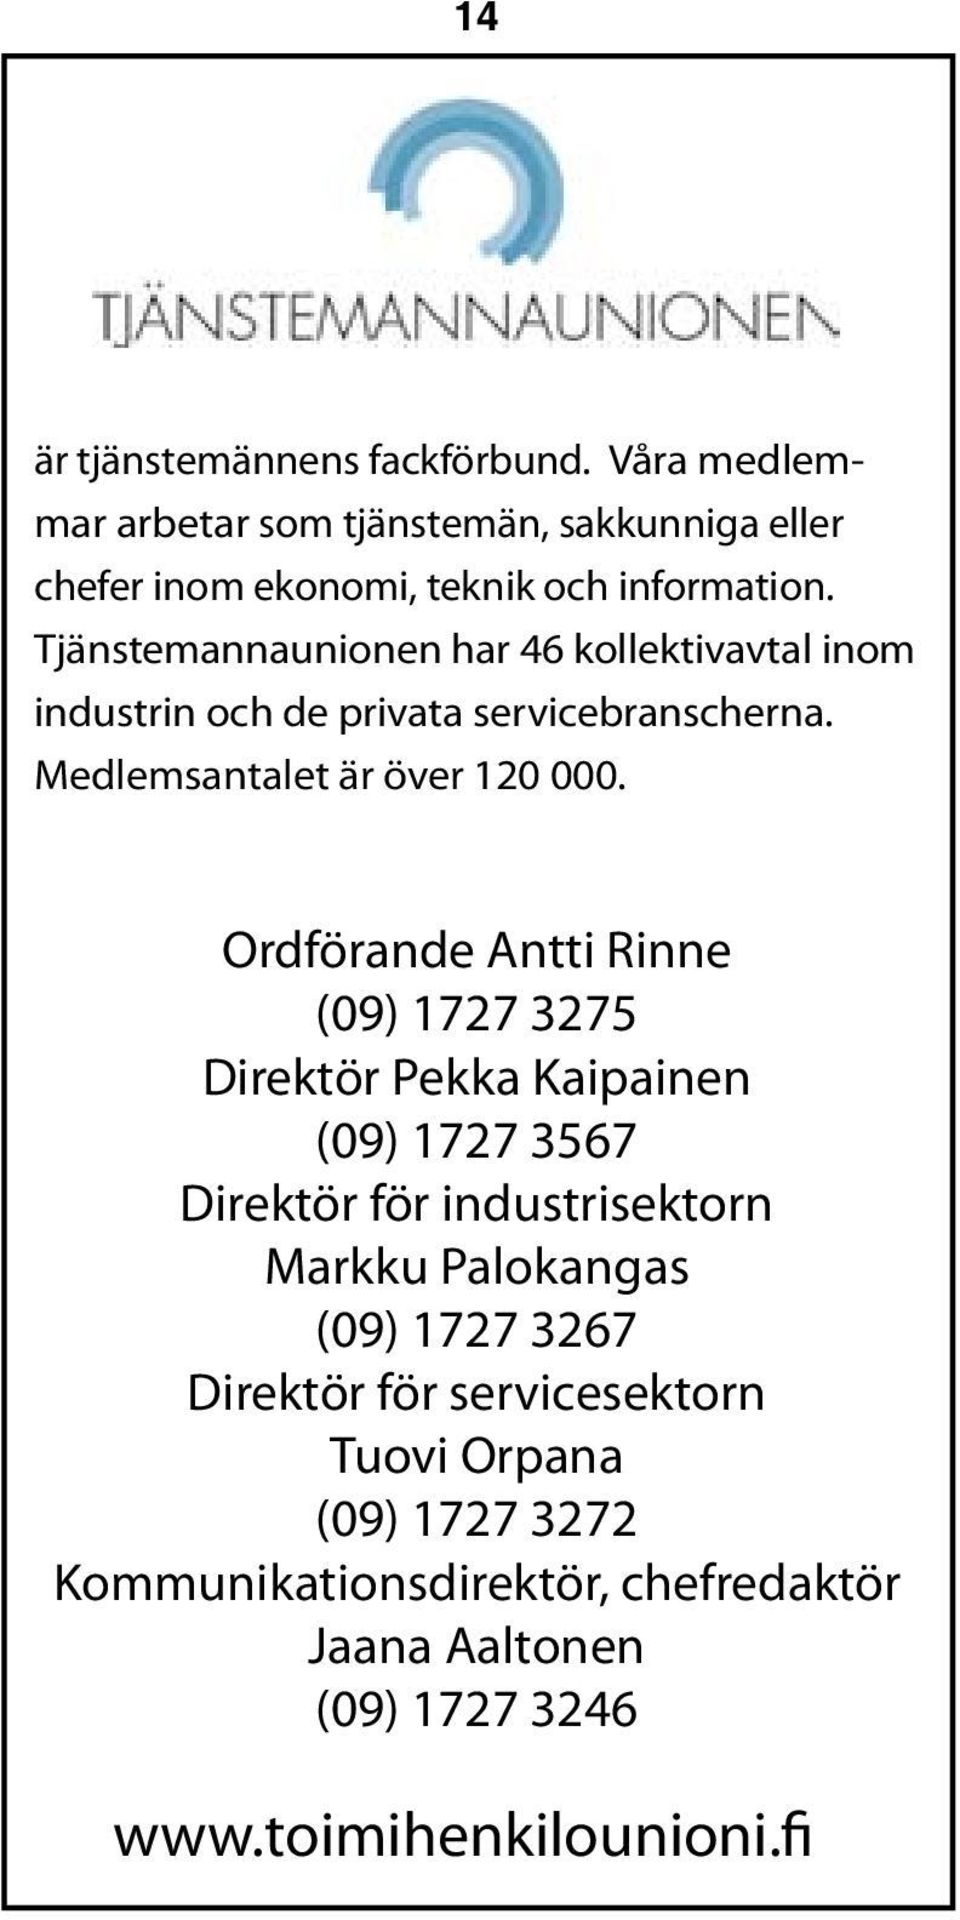 Ordförande Antti Rinne (09) 1727 3275 Direktör Pekka Kaipainen (09) 1727 3567 Direktör för industrisektorn Markku Palokangas (09) 1727